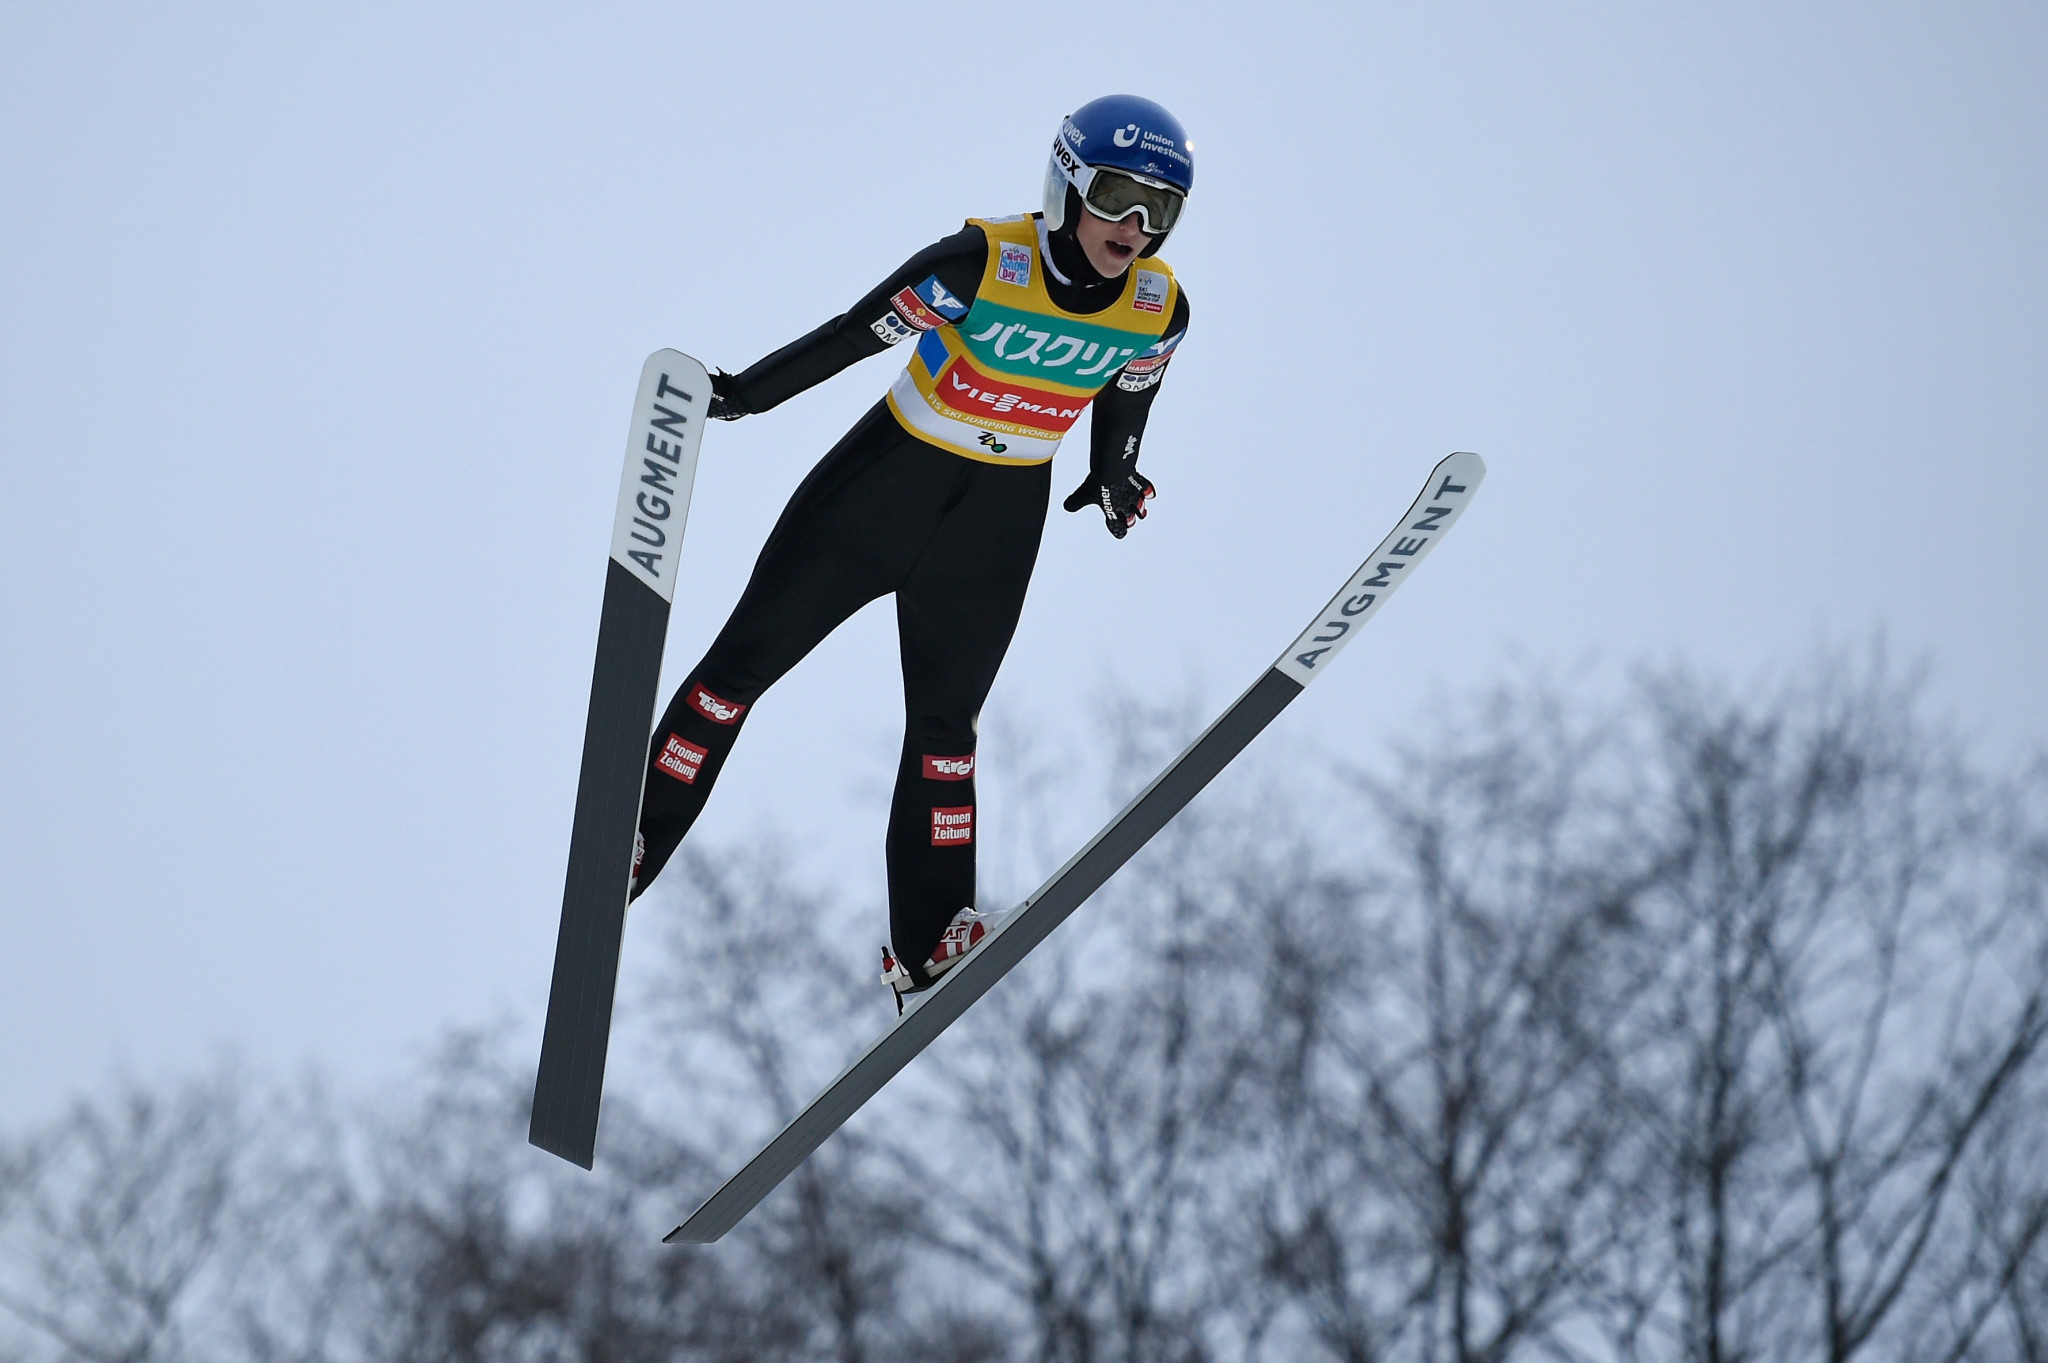 Pinkelnig earns second gold in Zao, as Austrian women take FIS Ski Jumping team title